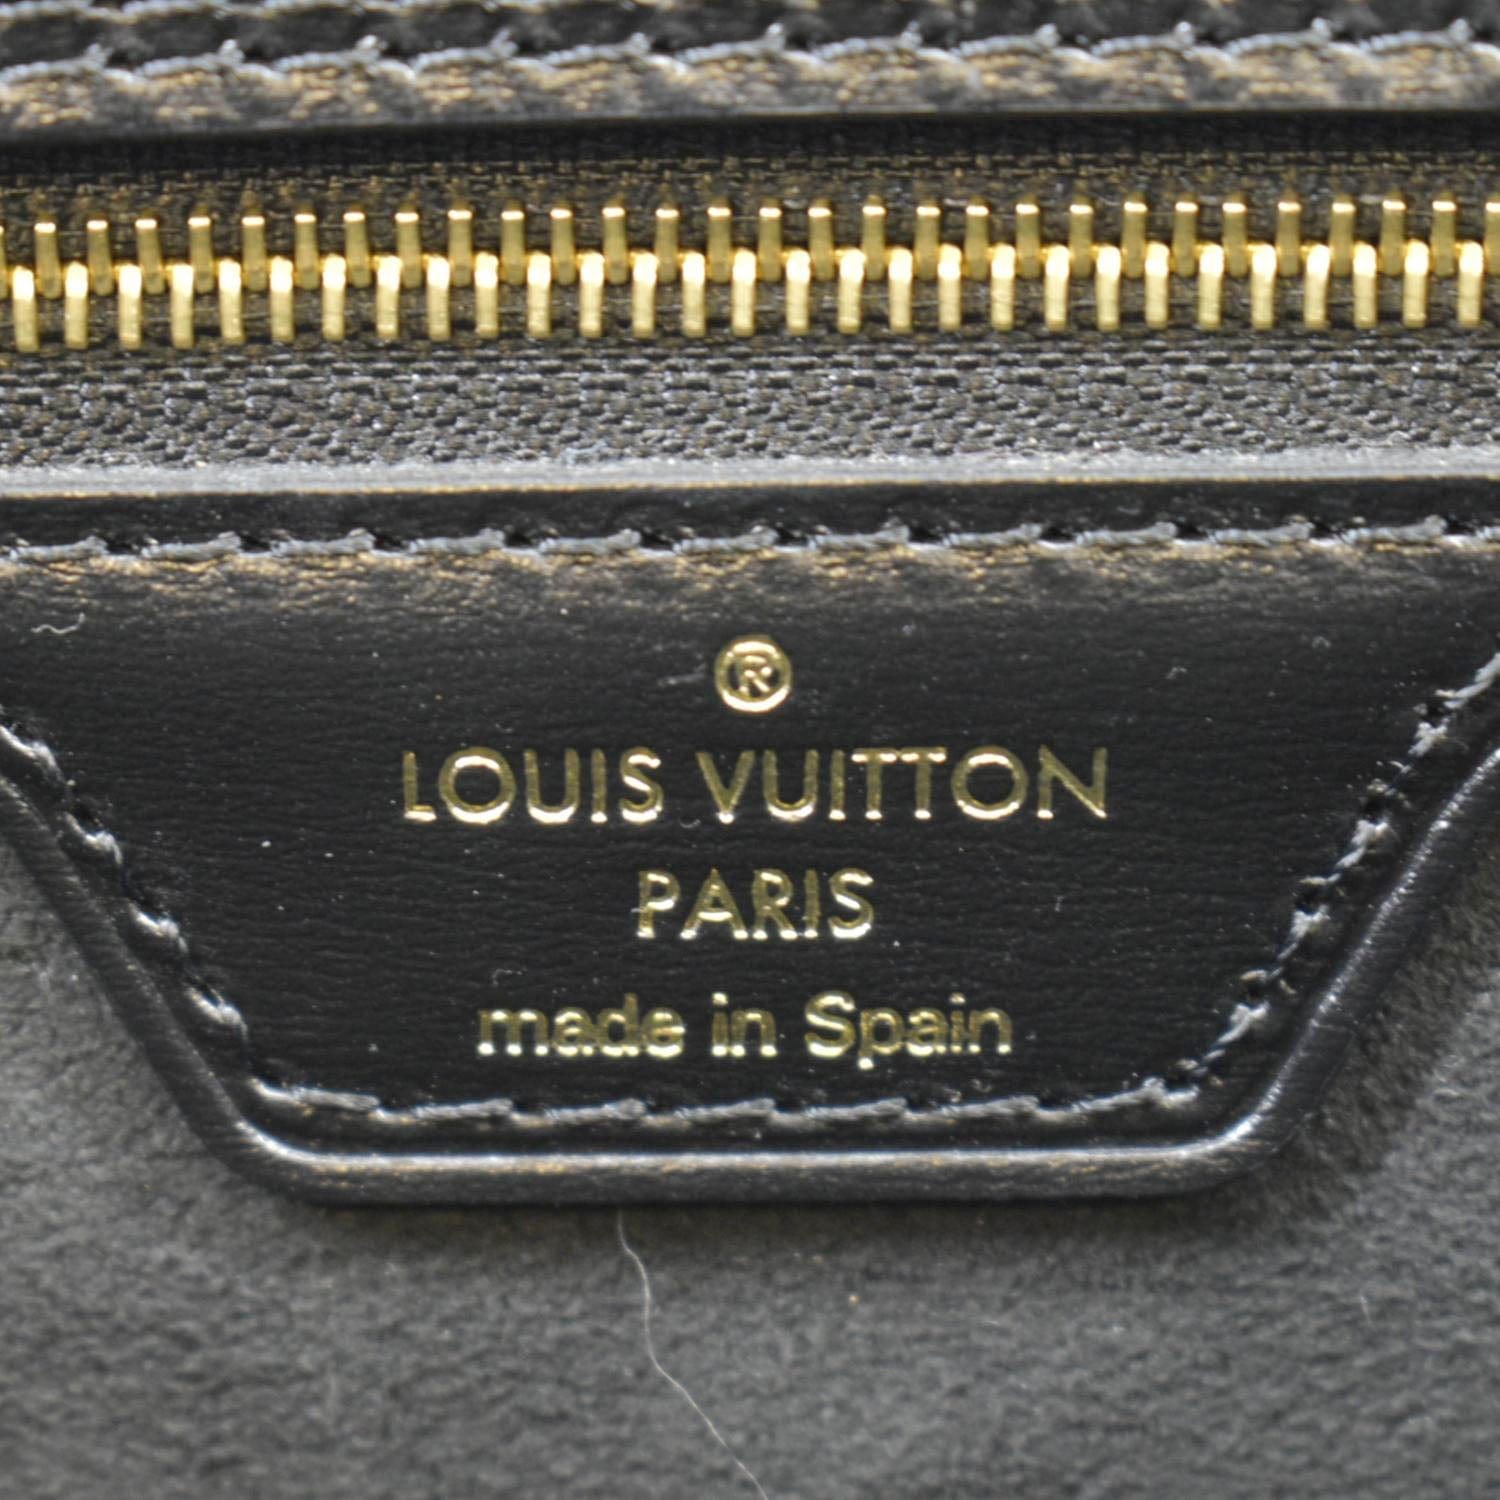 Louis Vuitton Neverfull MM Bag Monogram Canvas In Gradient Blue White -  Praise To Heaven